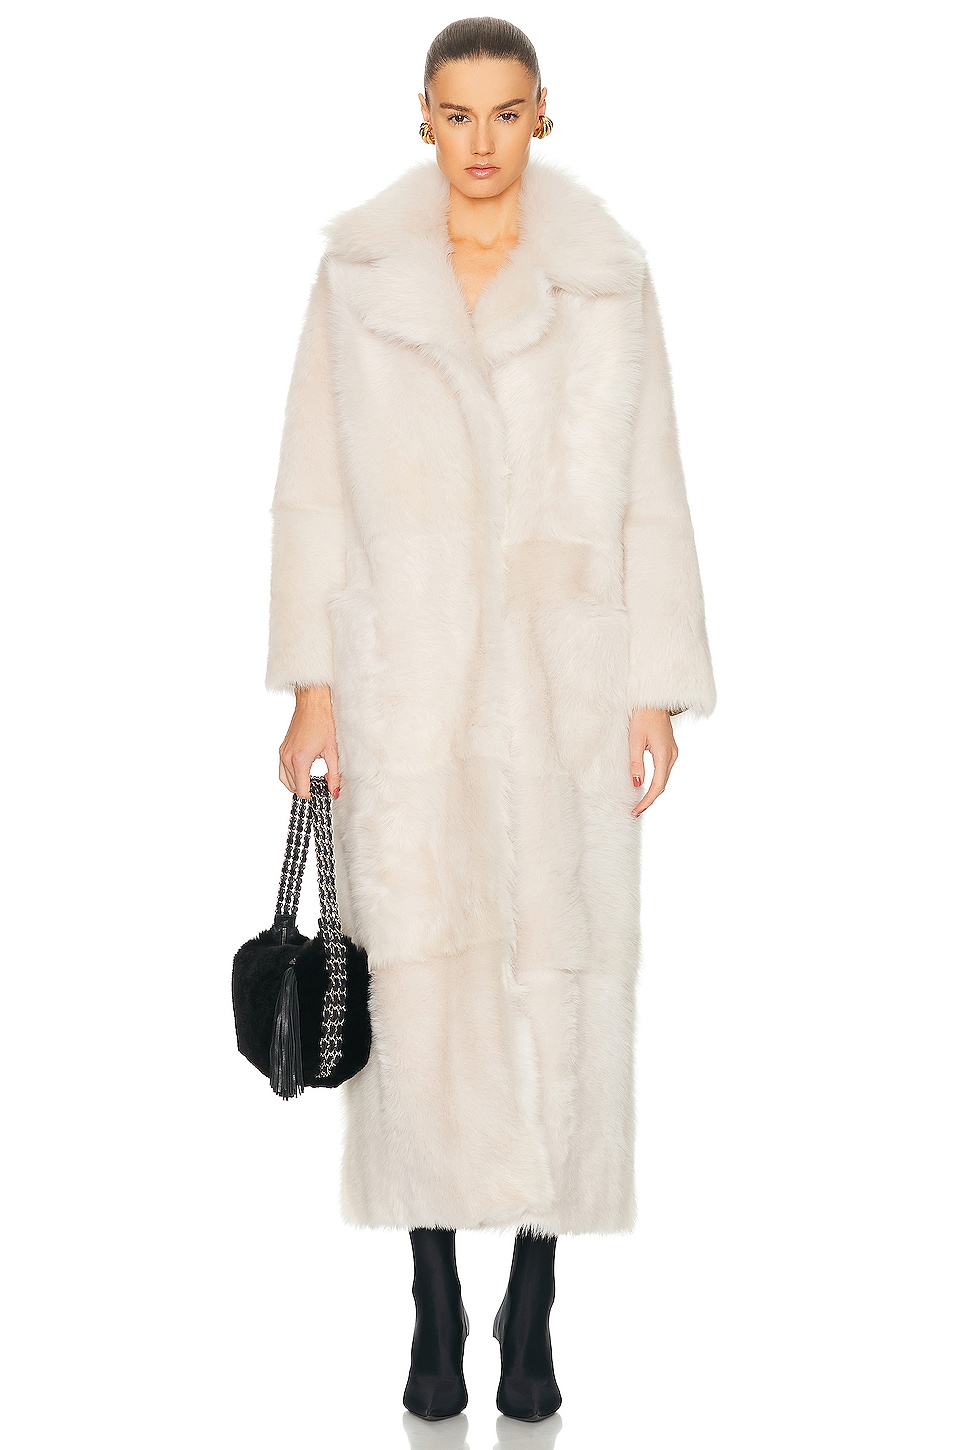 For FWRD Evita Extra Long Coat in White